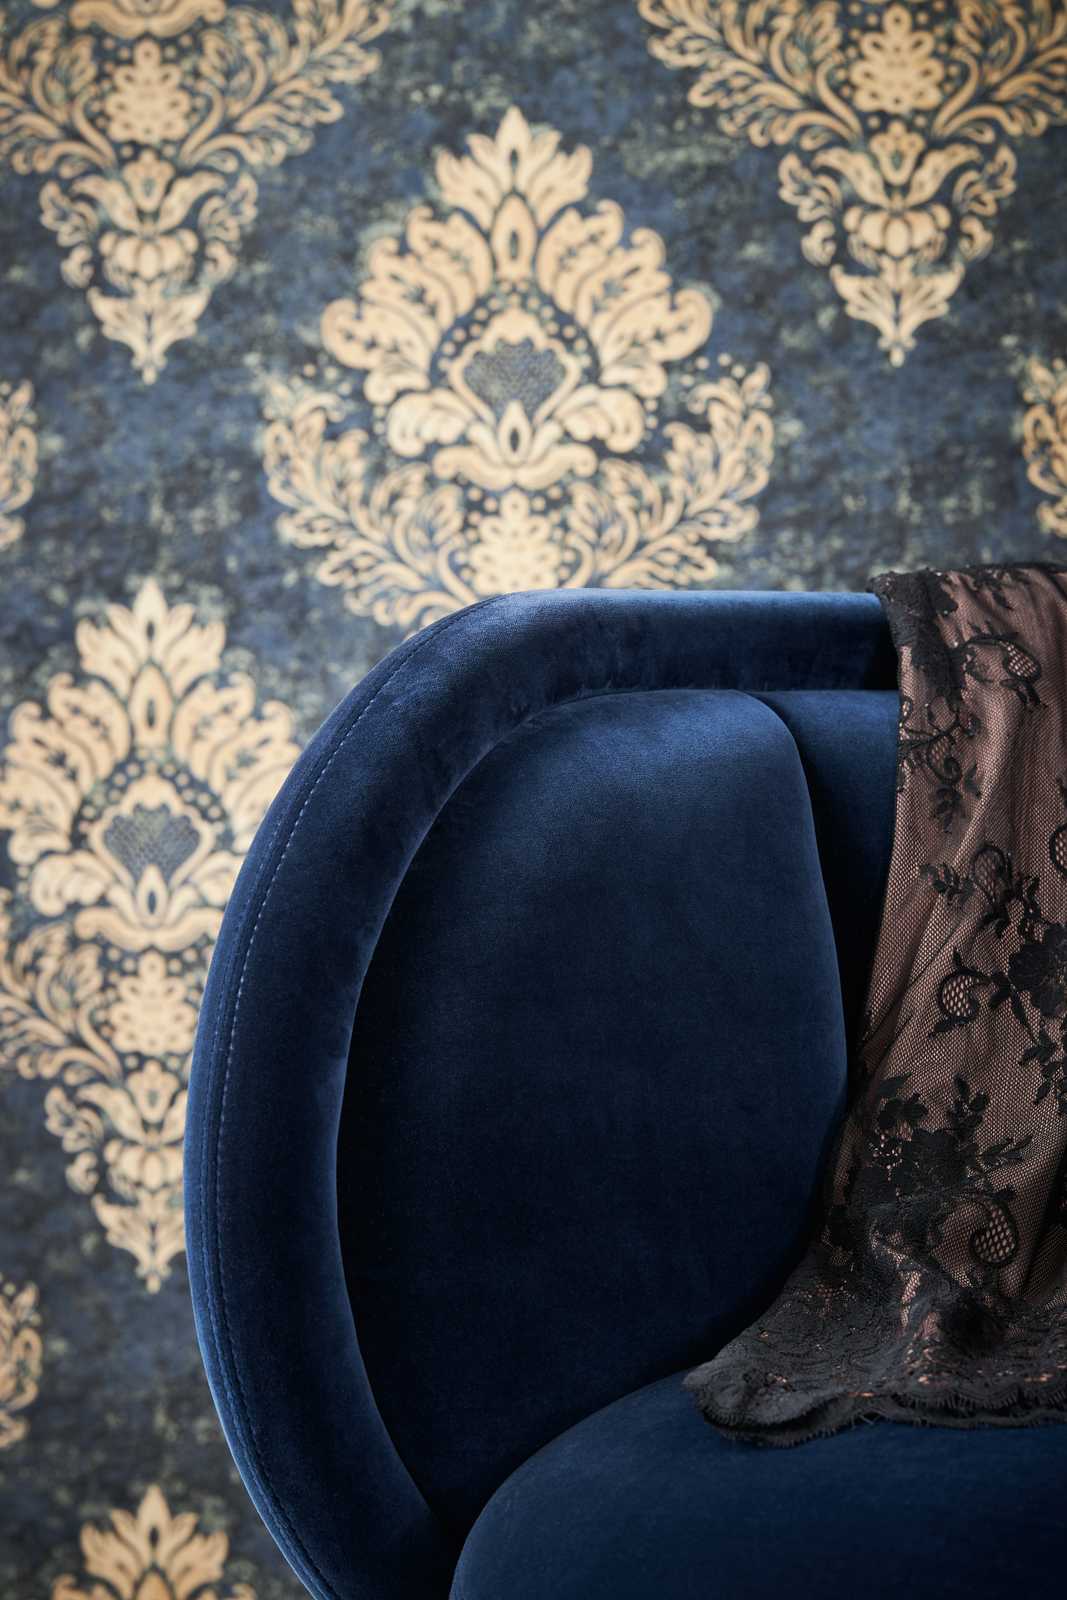             Ornamenttapete mit floralem Stil & Gold-Effekt – Beige, Blau, Braun
        